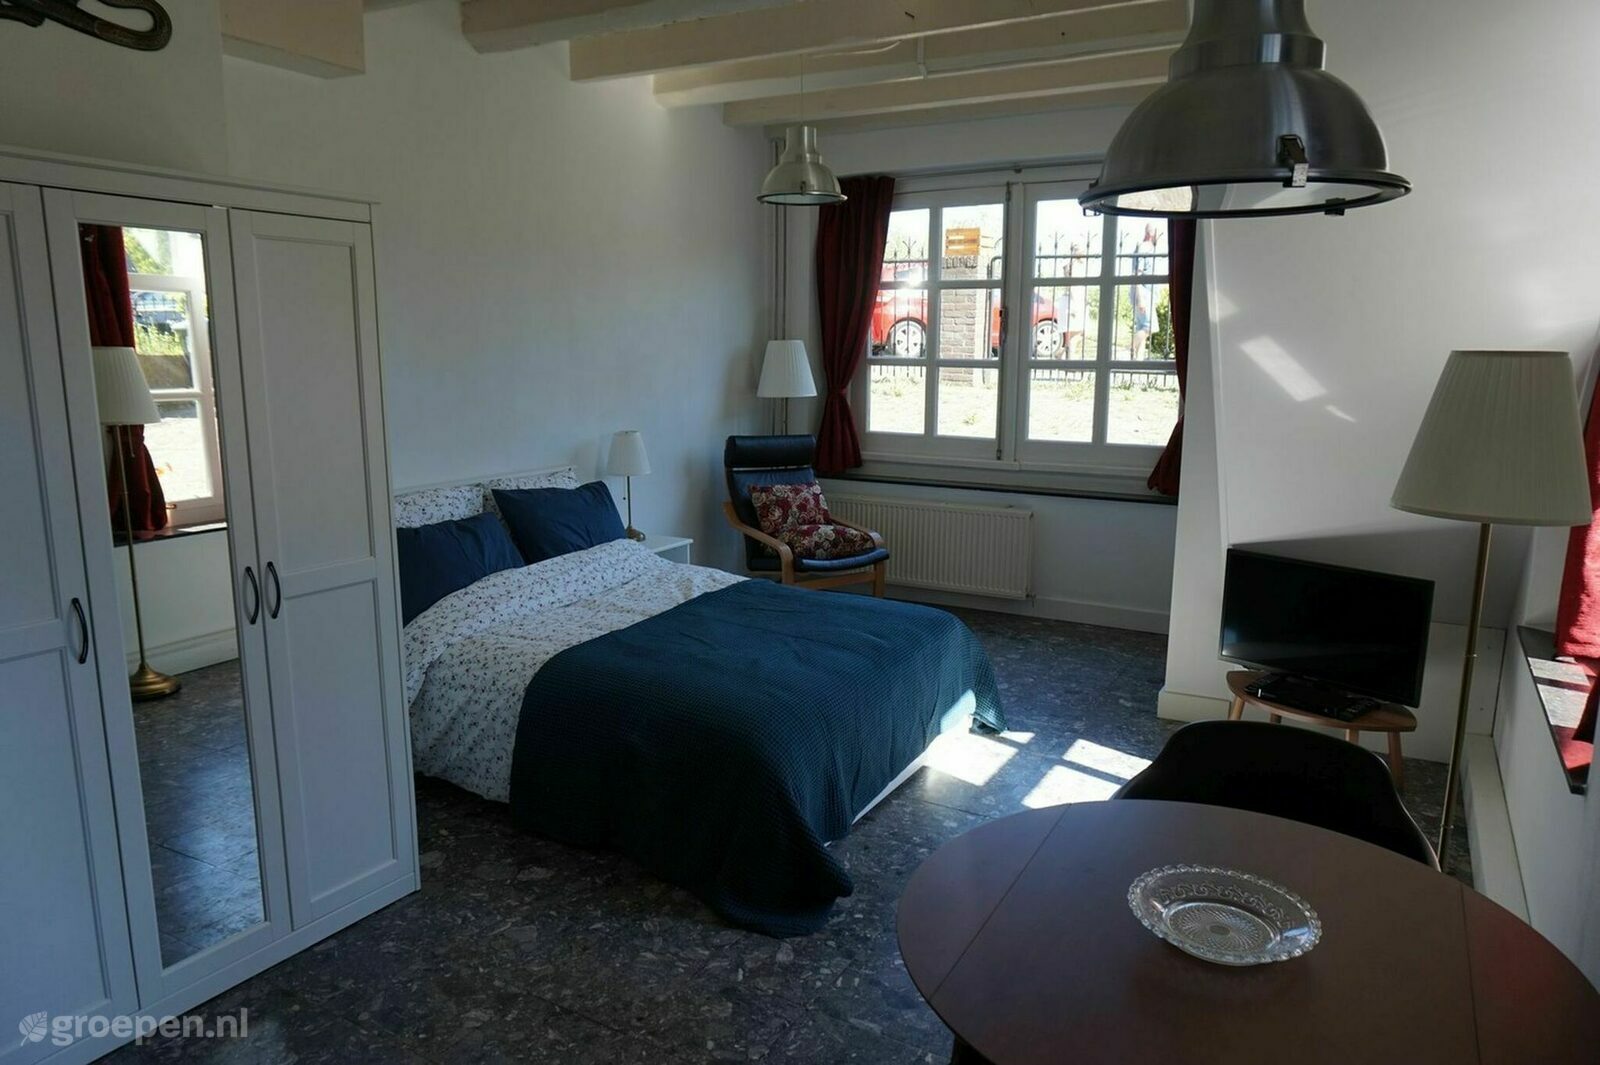 Group accommodation Nijmegen